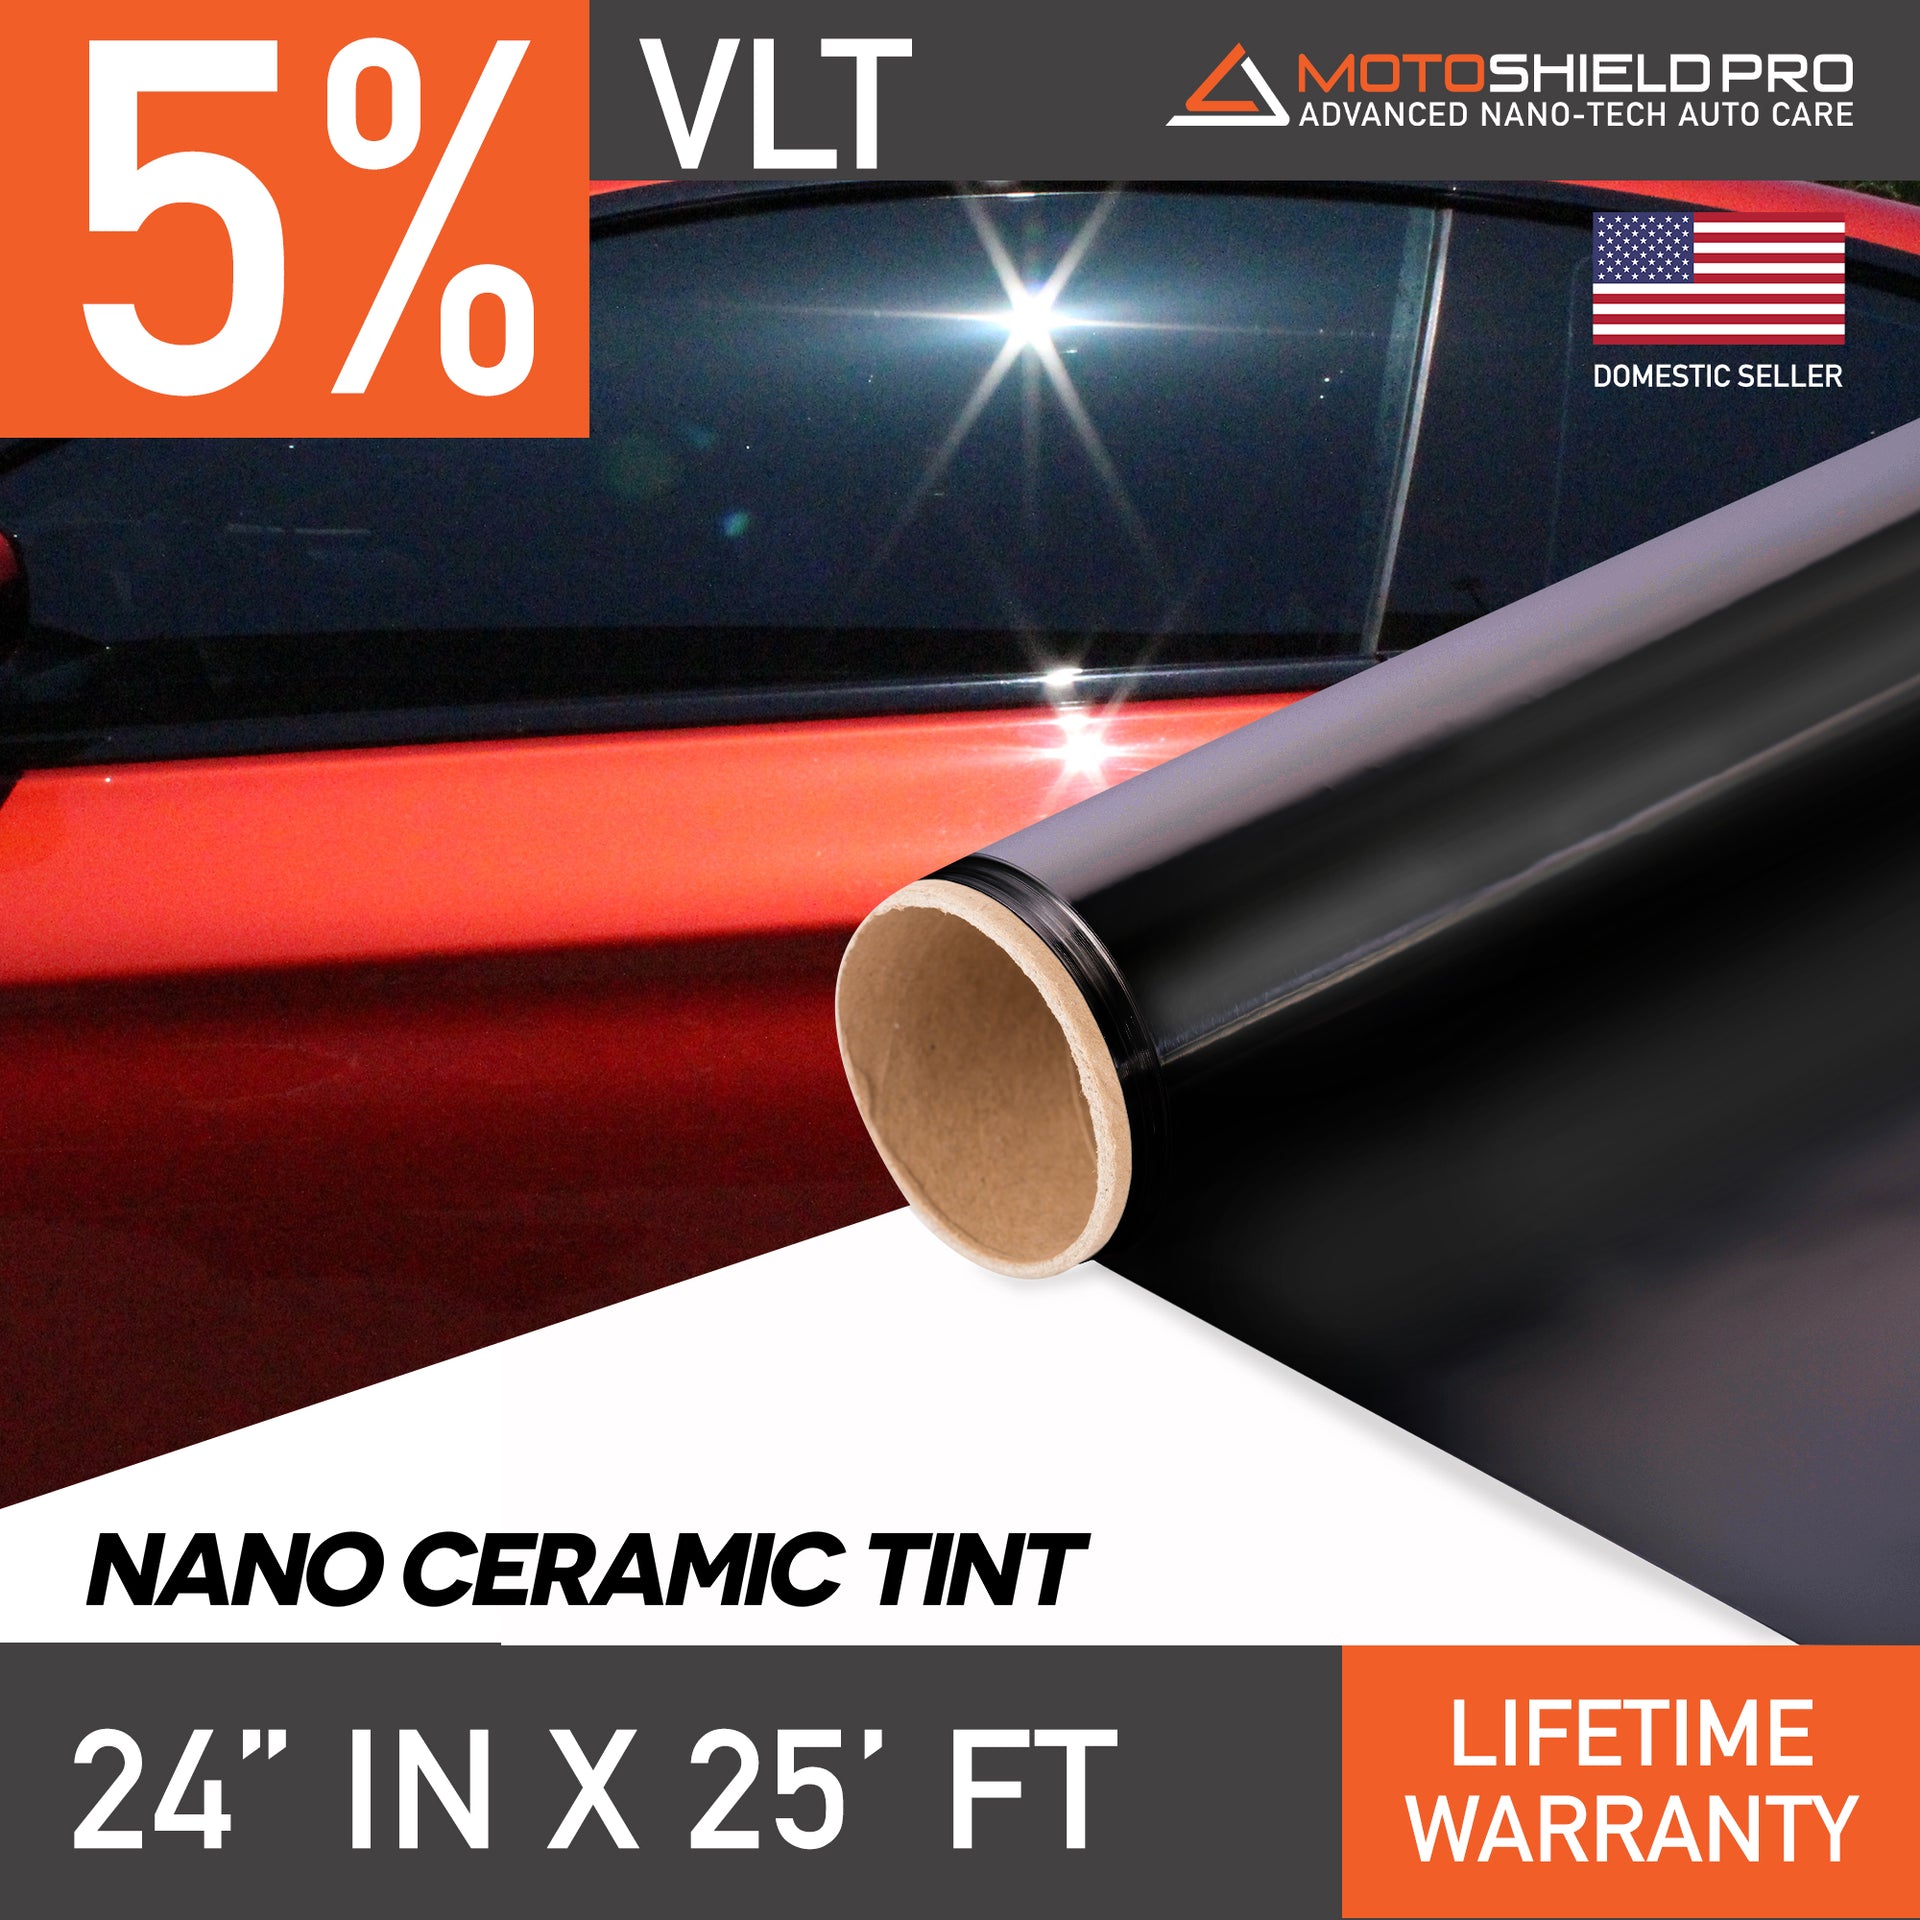 DIY-MotoShield Pro Premium Nano Ceramic Tint (25% VLT) 30” in x 5' ft Roll  | Professional Window Fil…See more DIY-MotoShield Pro Premium Nano Ceramic